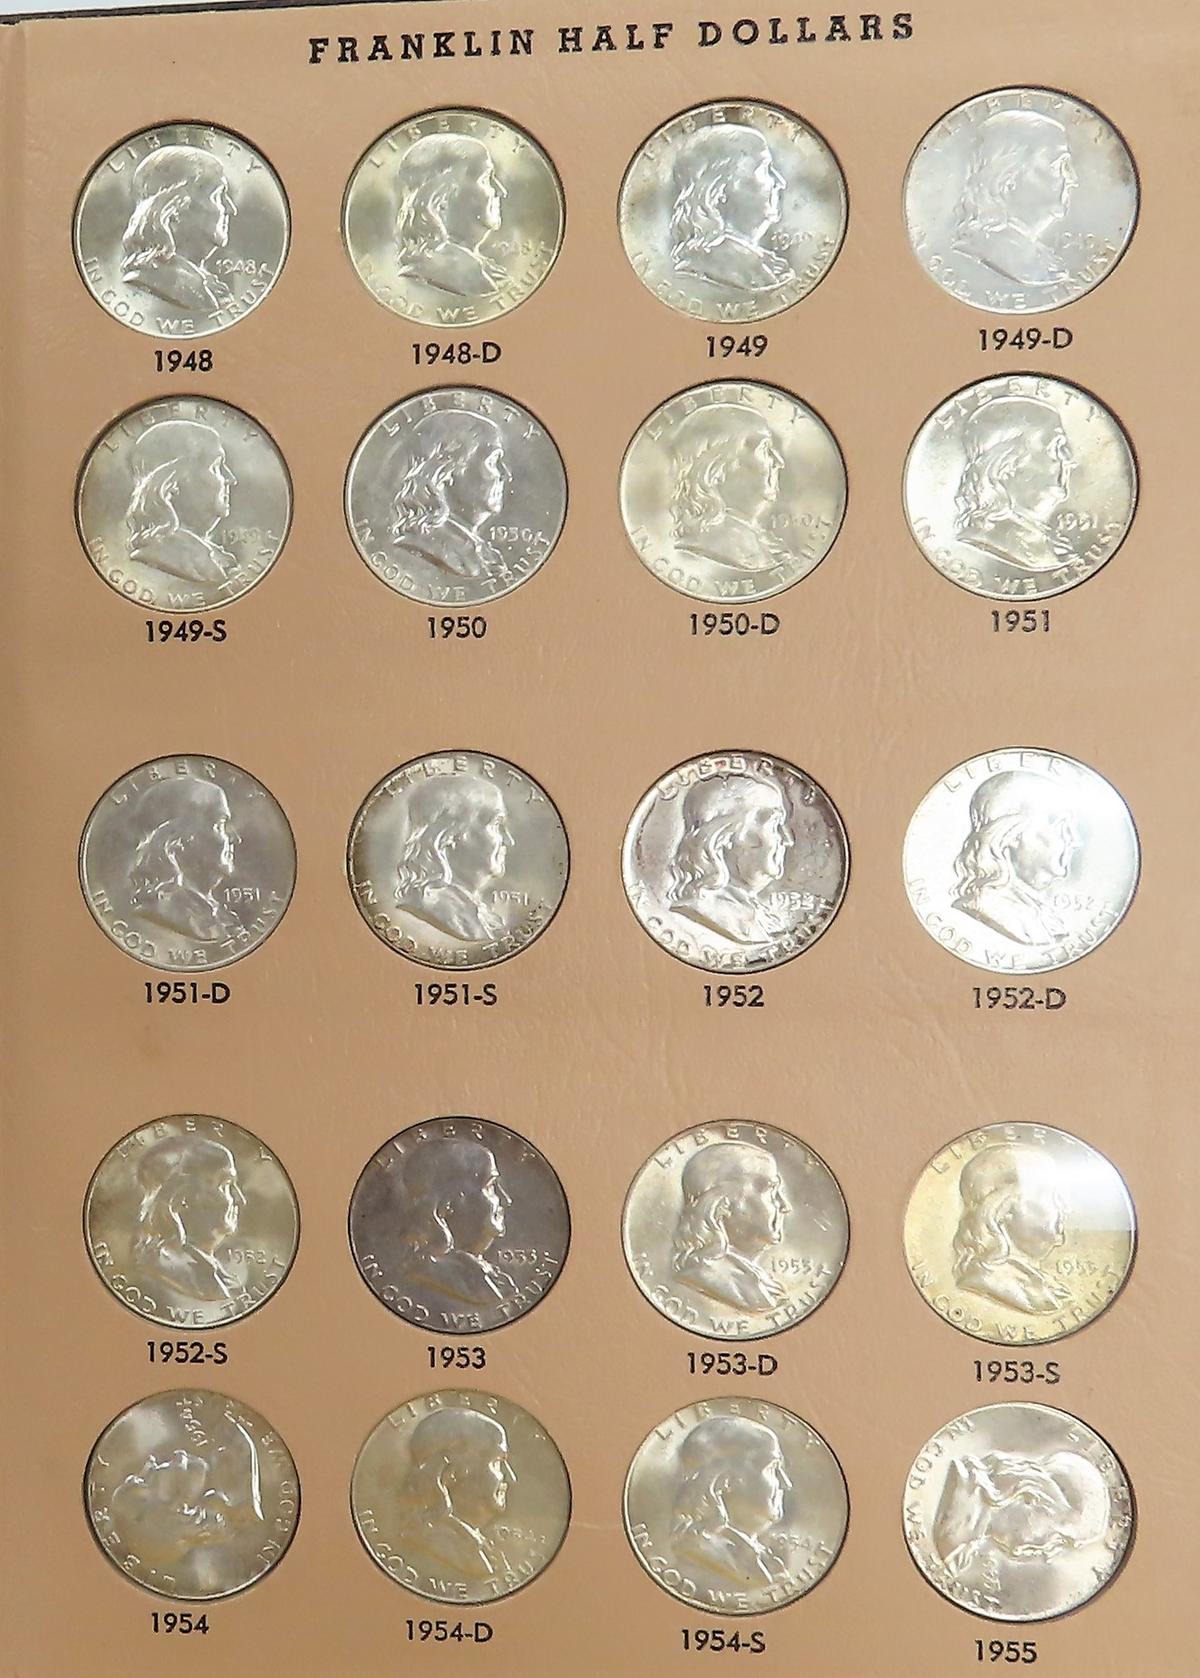 Complete Book of Silver Franklin Half Dollars, 35 Total, $8.60 melt value each (9-15-21) $301 Total